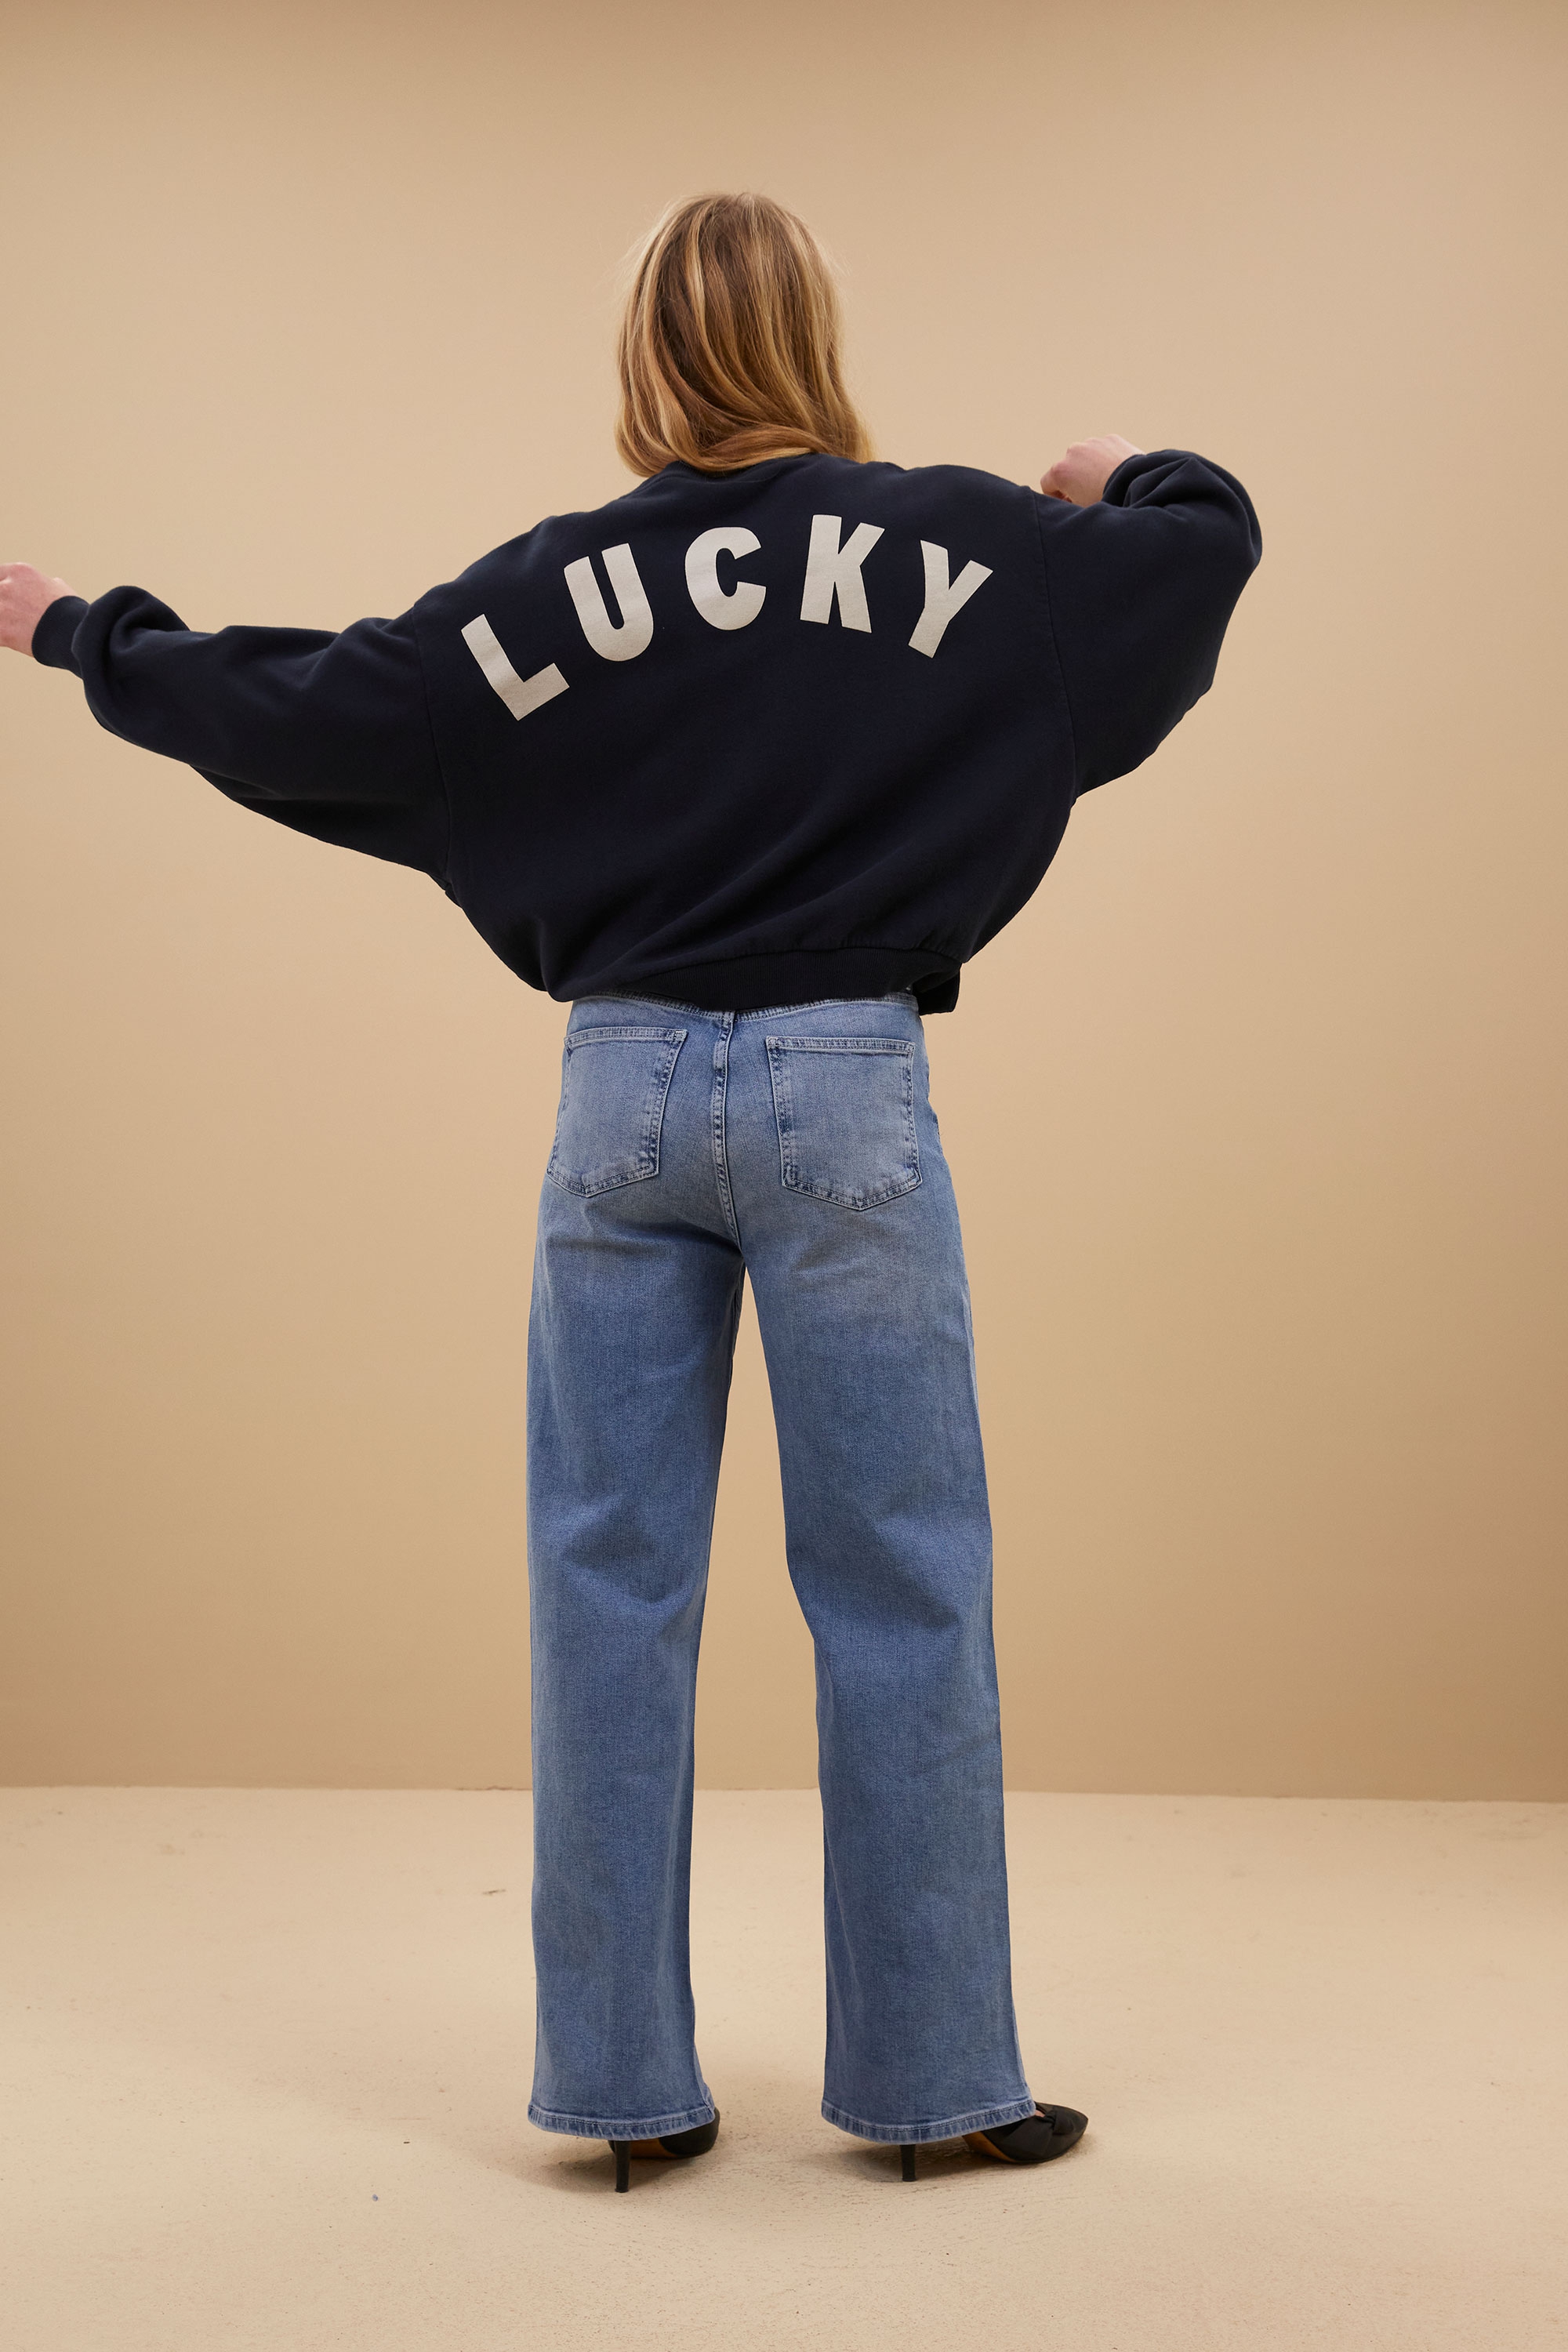 Bibi lucky curve sweater - by-bar